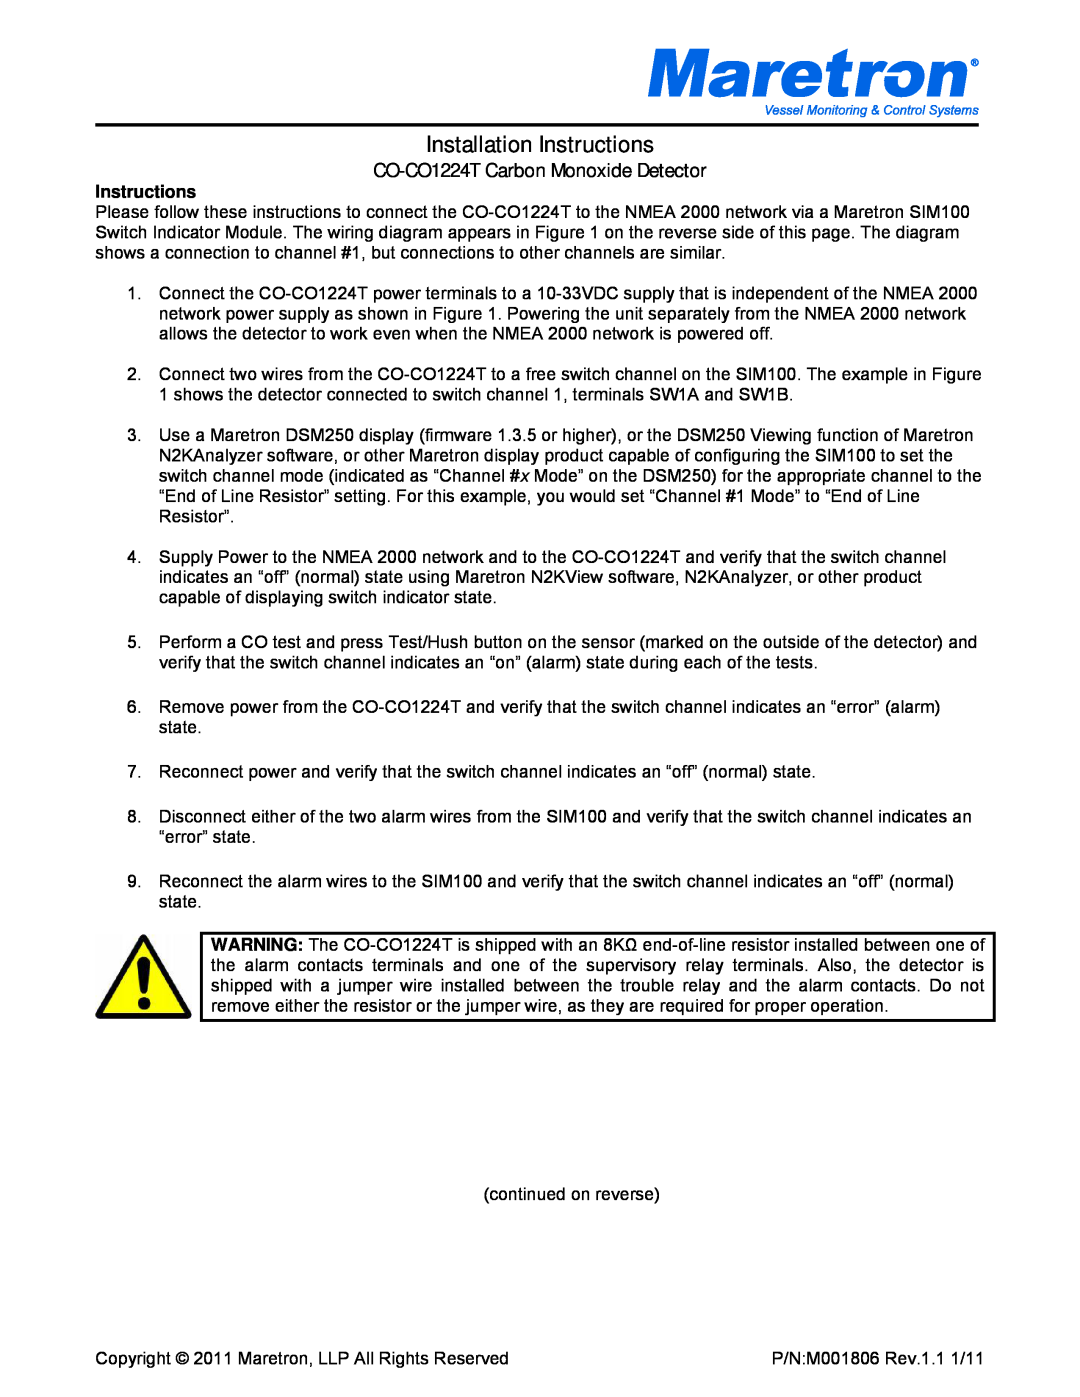 Maretron installation instructions CO-CO1224TCarbon Monoxide Detector, Installation Instructions 